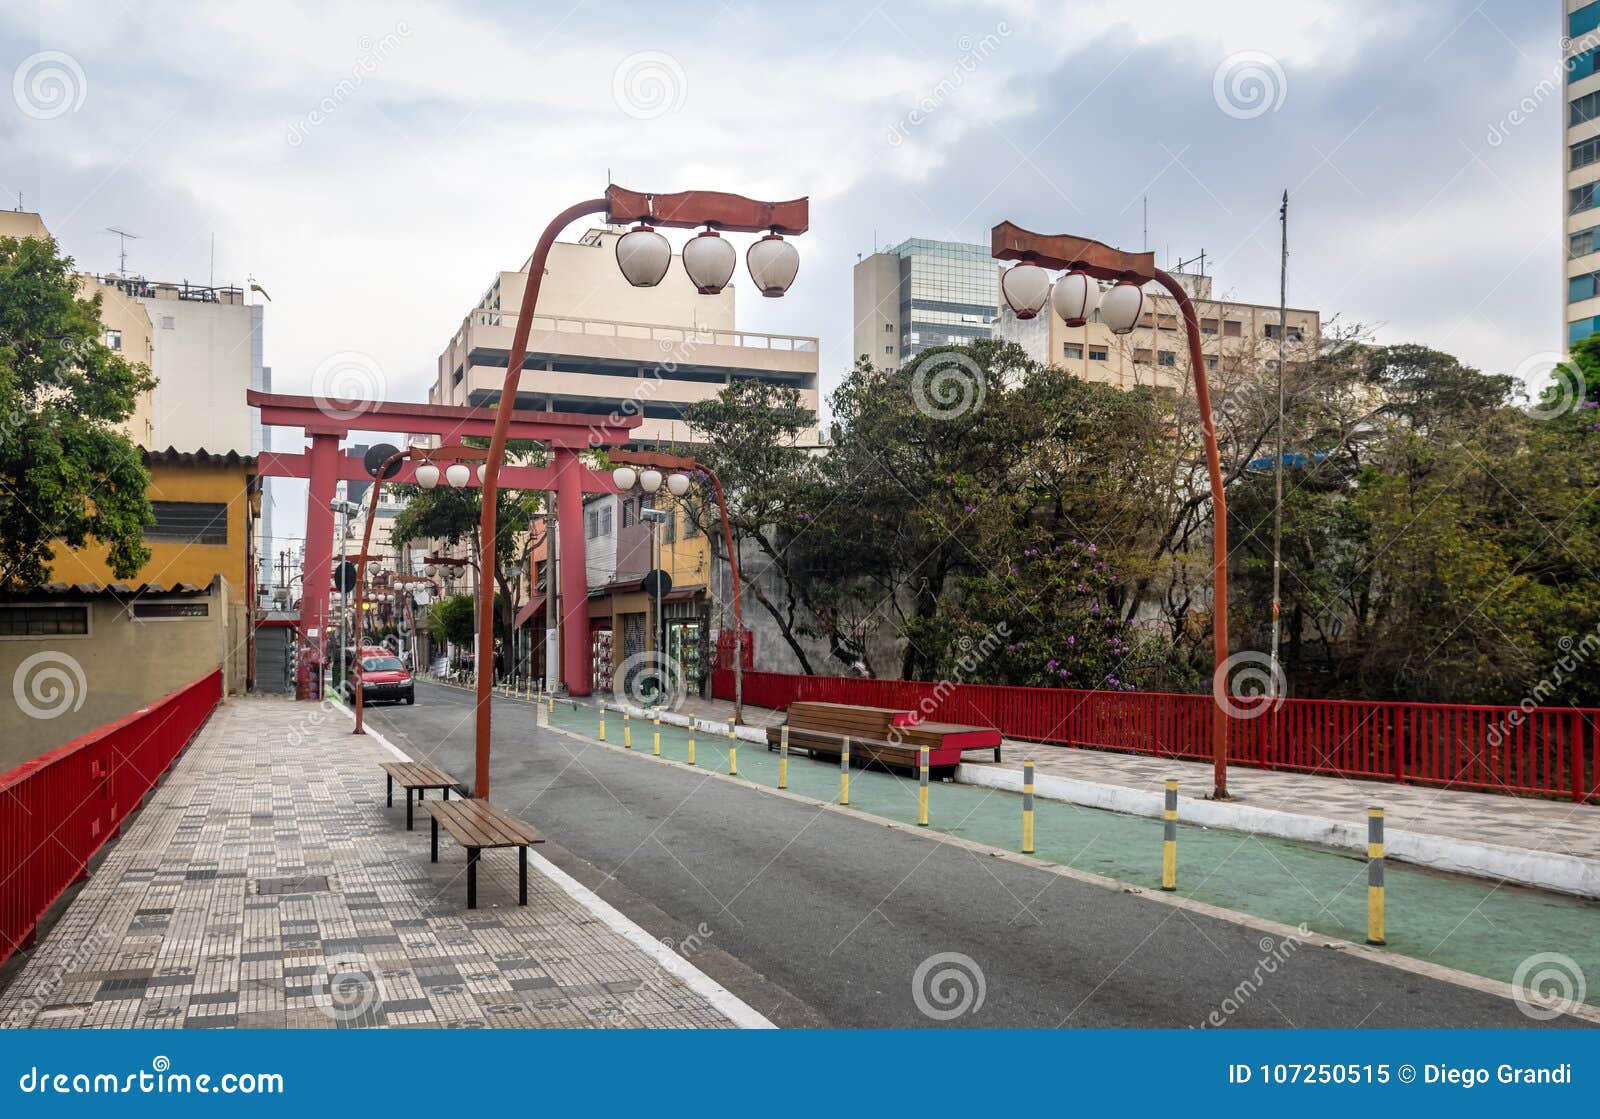 torii gate at liberdade avenue in liberdade japanese neighborhood - sao paulo, brazil